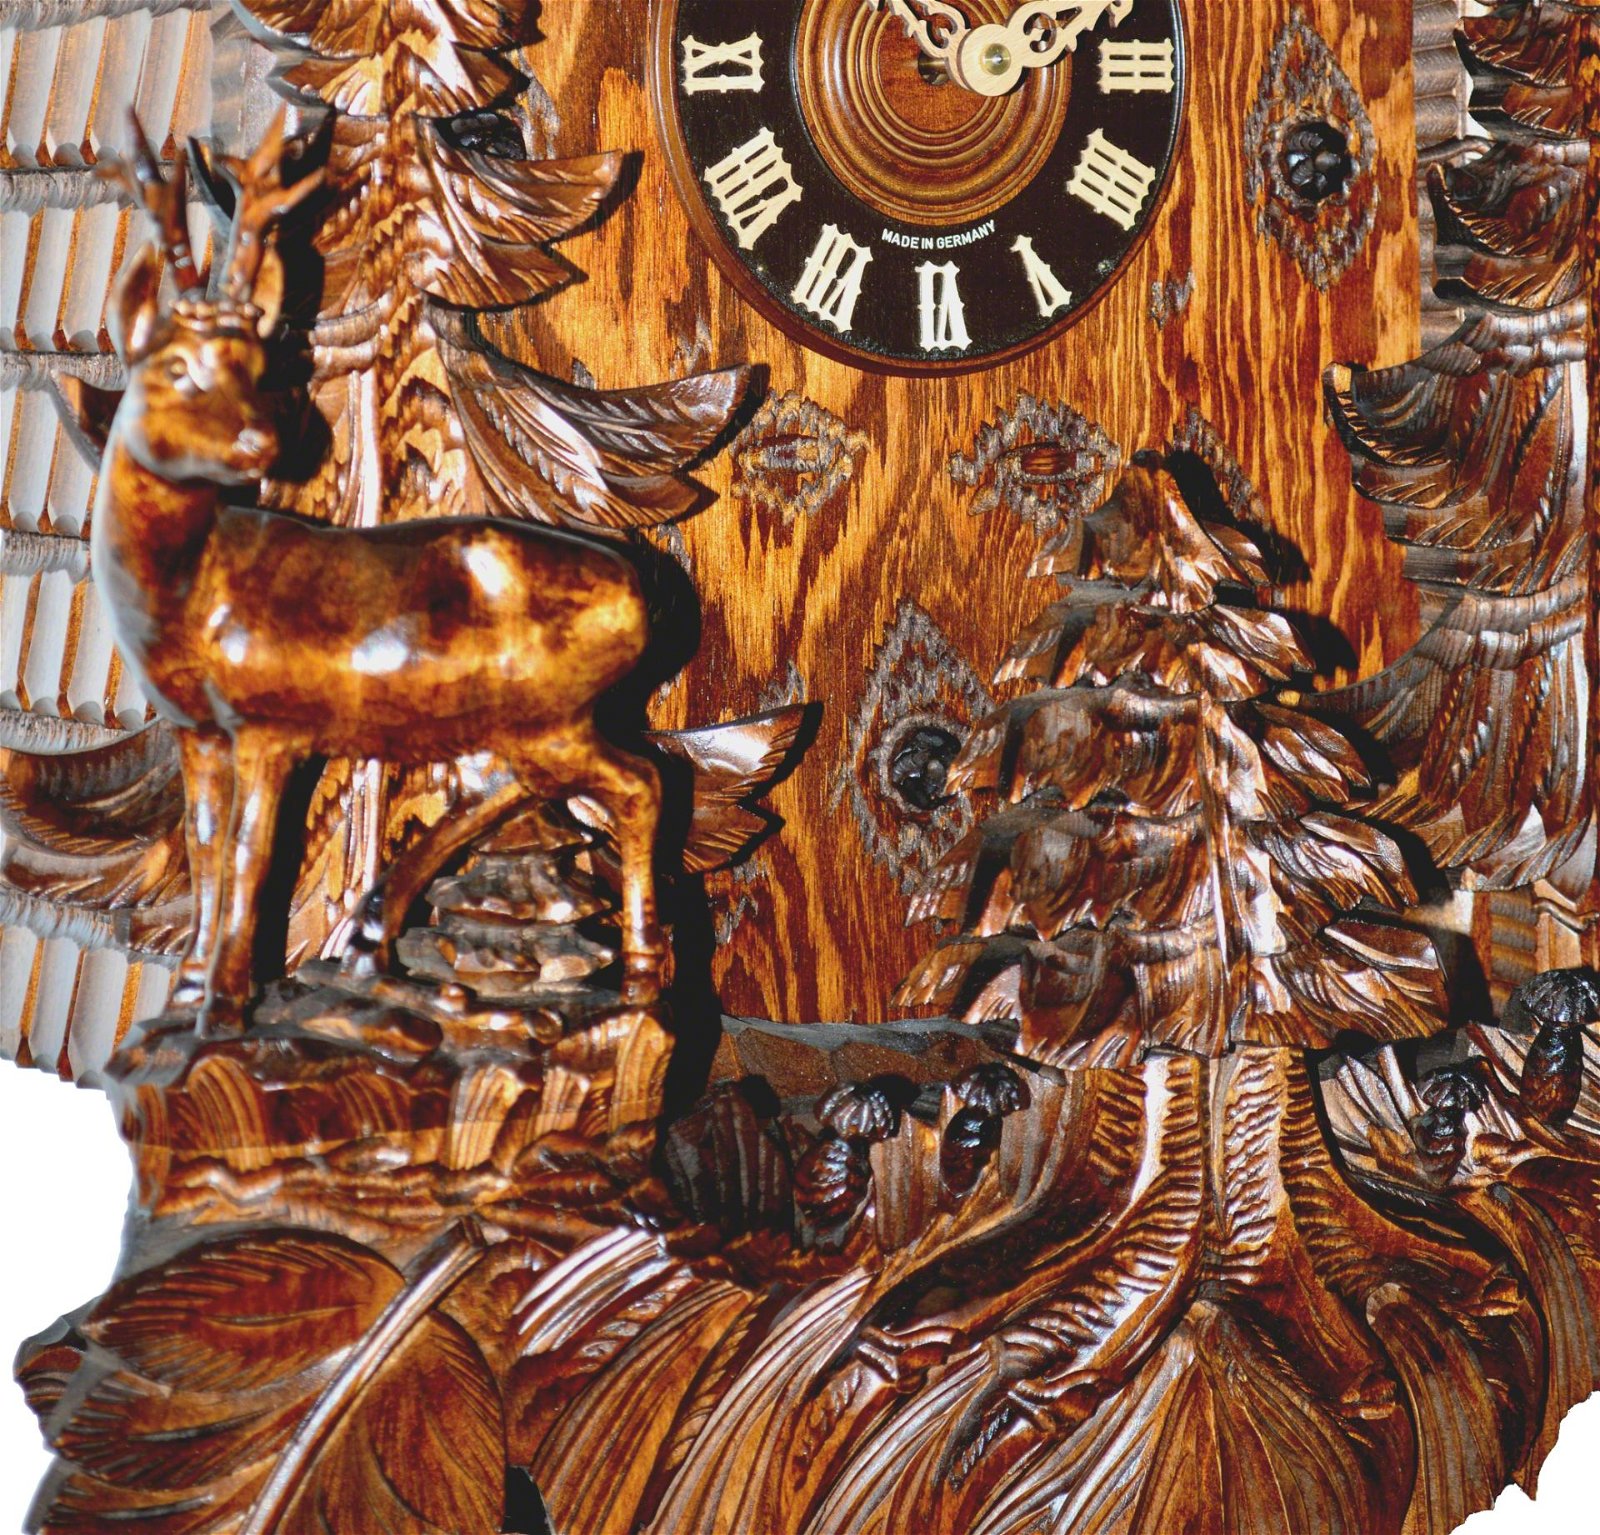 Reloj de cuco estilo “Madera tallada” movimiento mecánico de 8 días 95cm de August Schwer